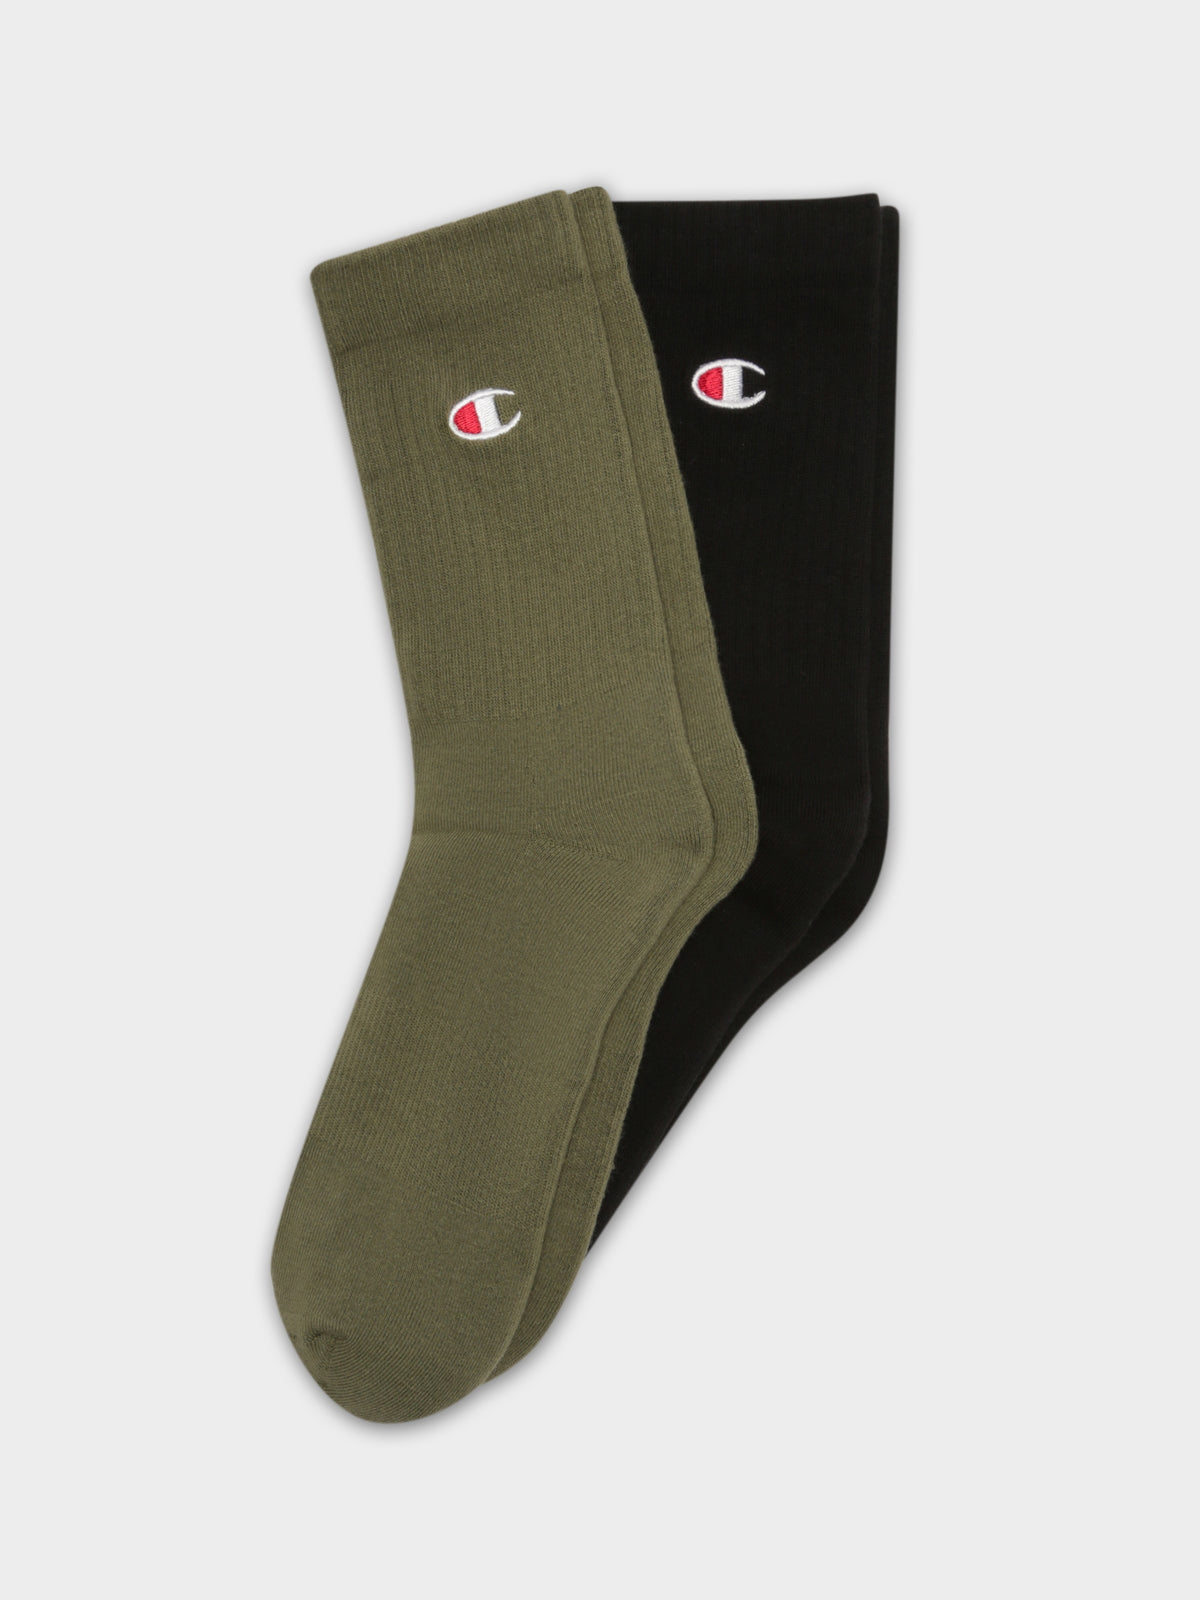 2 Pairs of Branded Crew Socks in Green &amp; Black